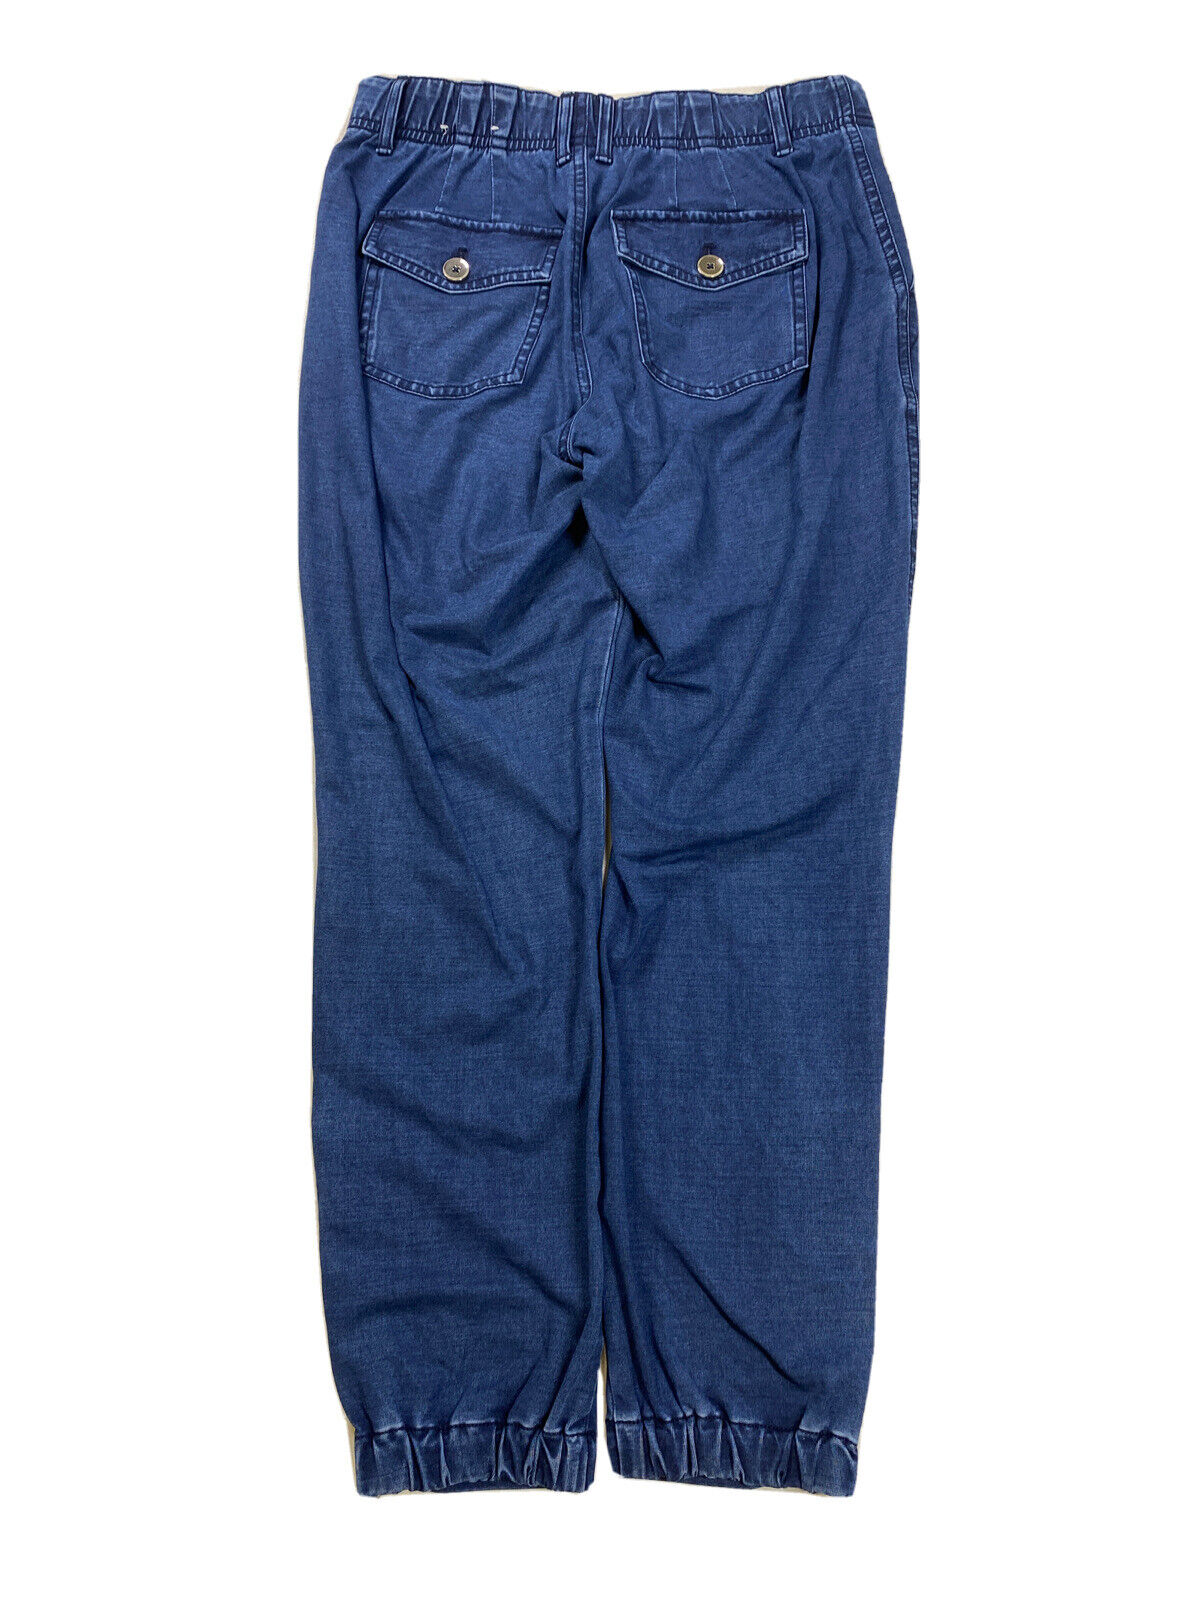 White House Black Market Women's Blue Knit Denim Utility Jeans Sz 4